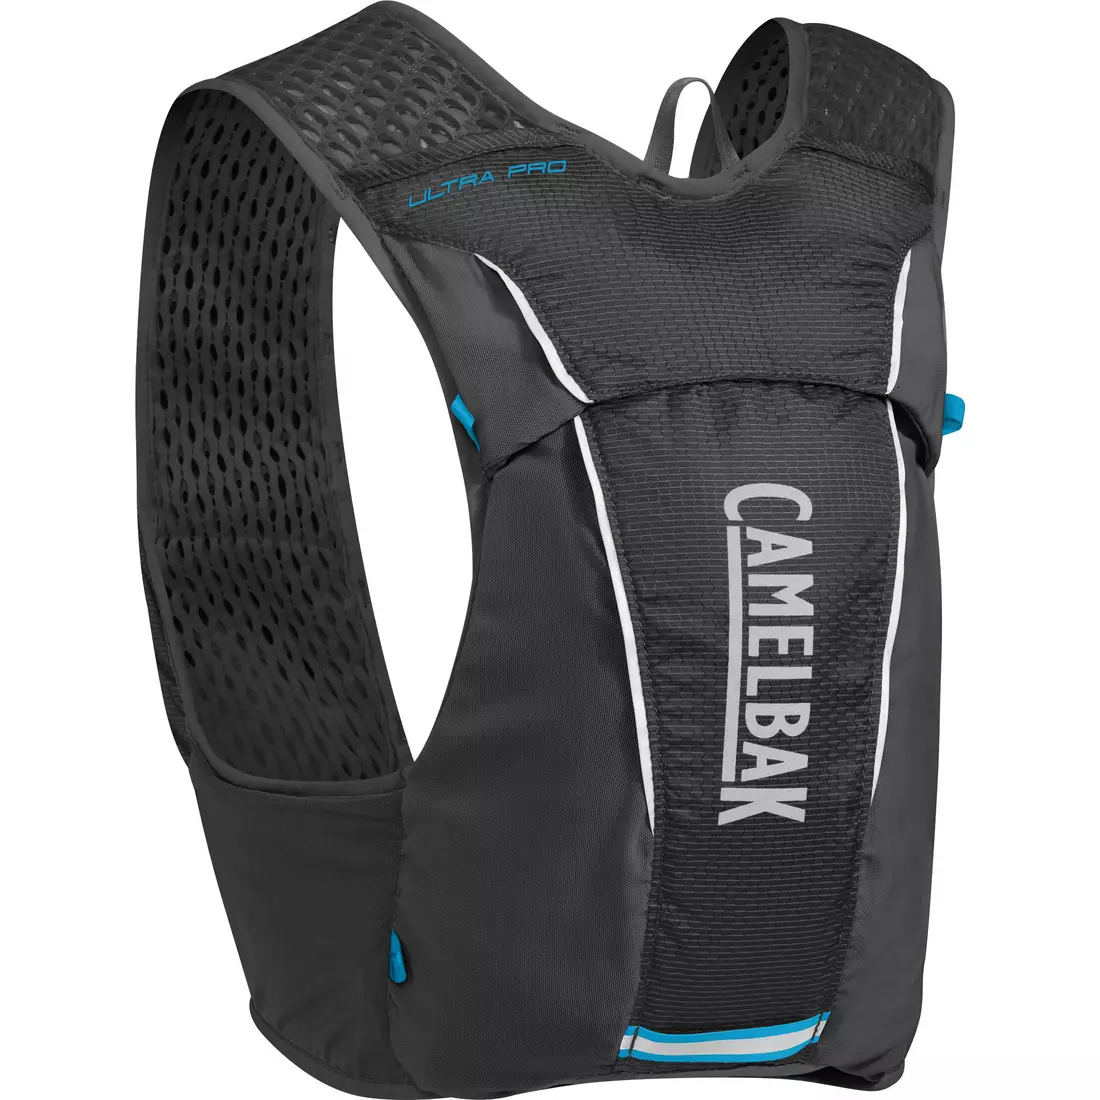 Camelbak running backpack / vest with water bottles Ultra Pro Vest 1L Quick Stow Flask Black/Atomic Blue